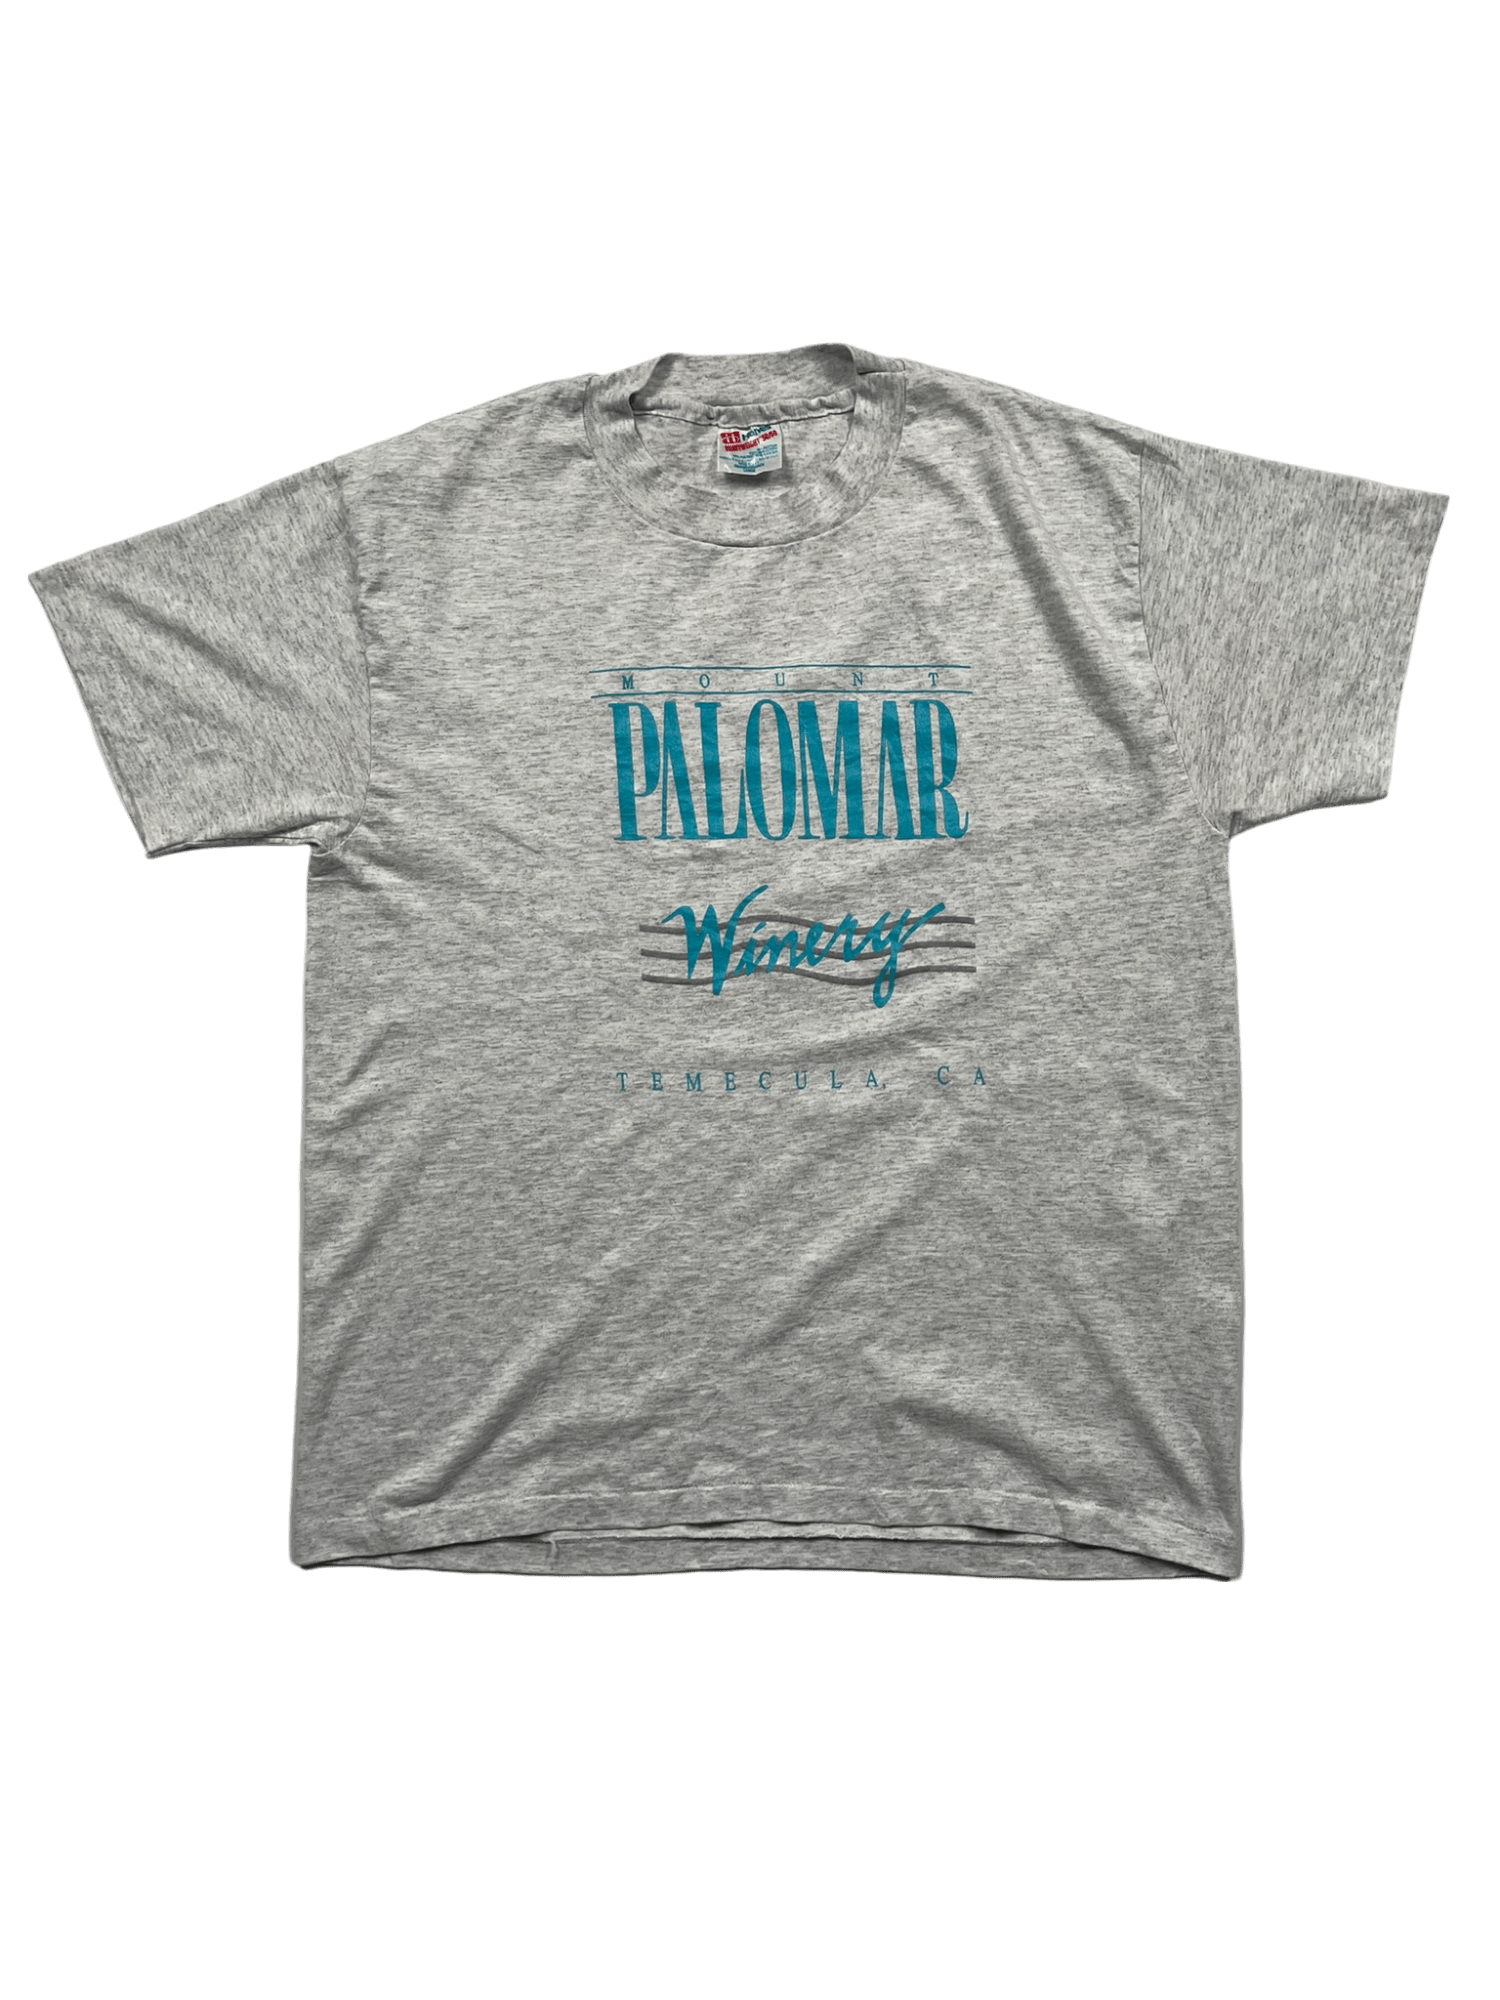 The Vintage Racks T-Shirt Palomar Winery - L